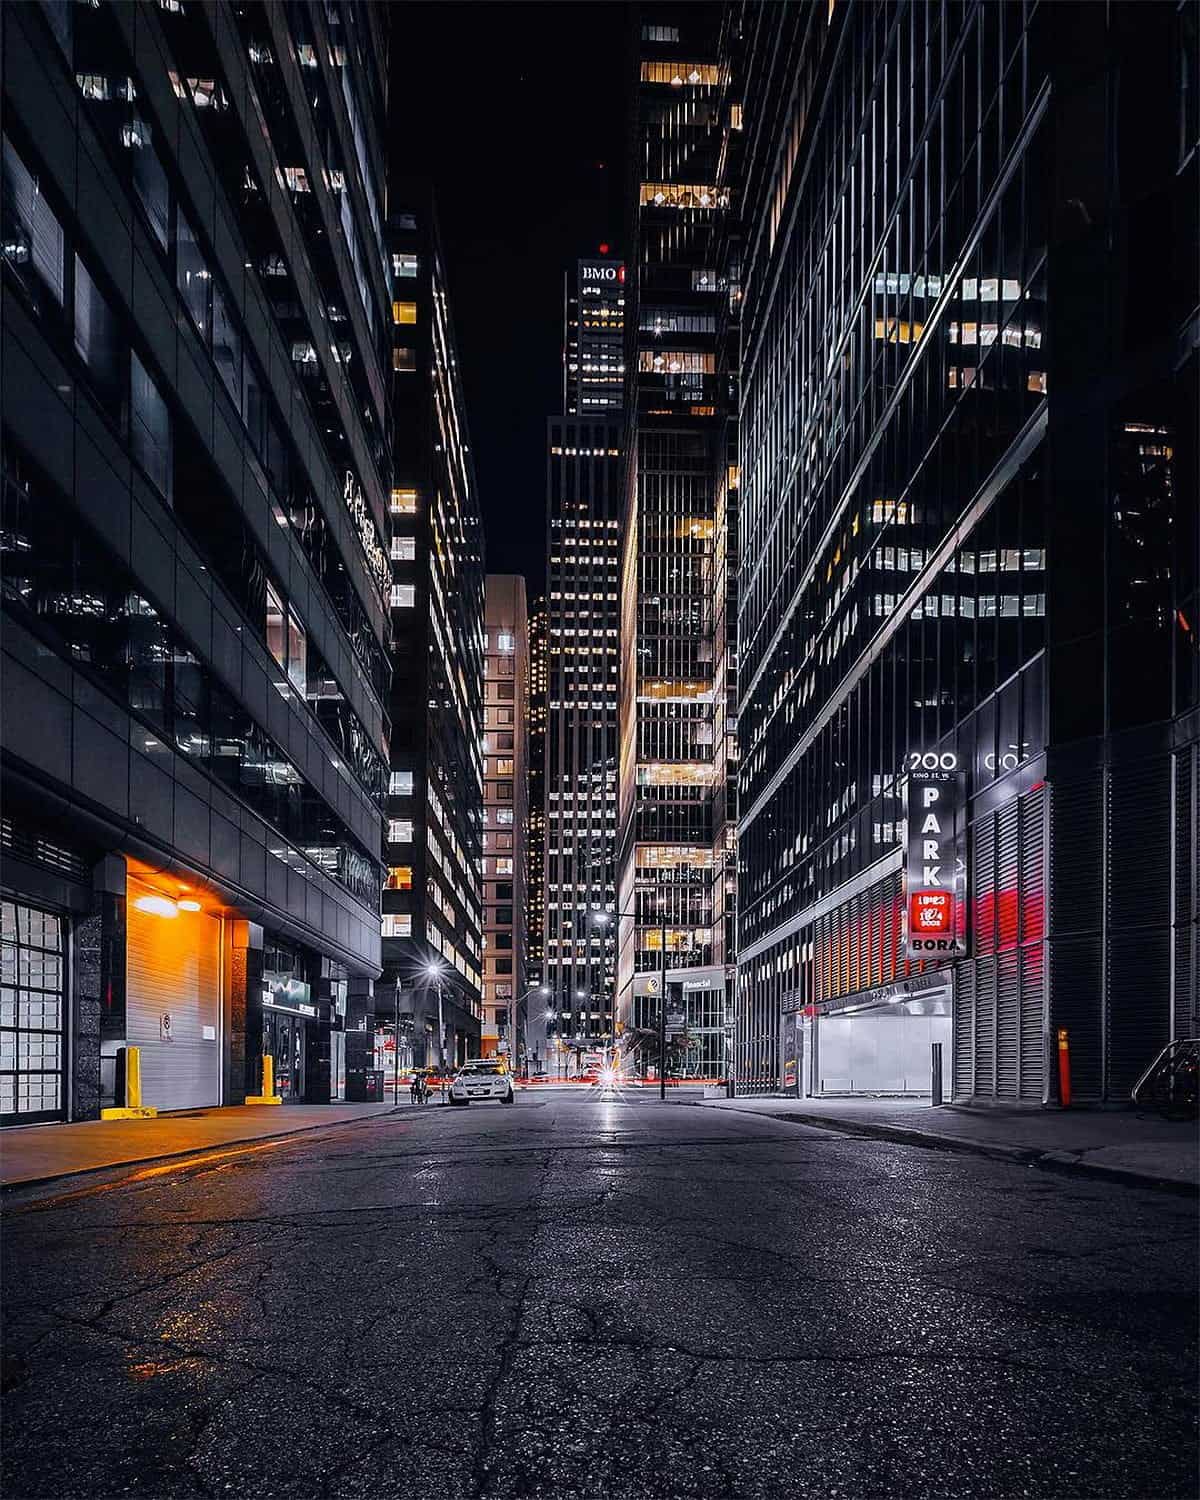 Nachtelijk Toronto